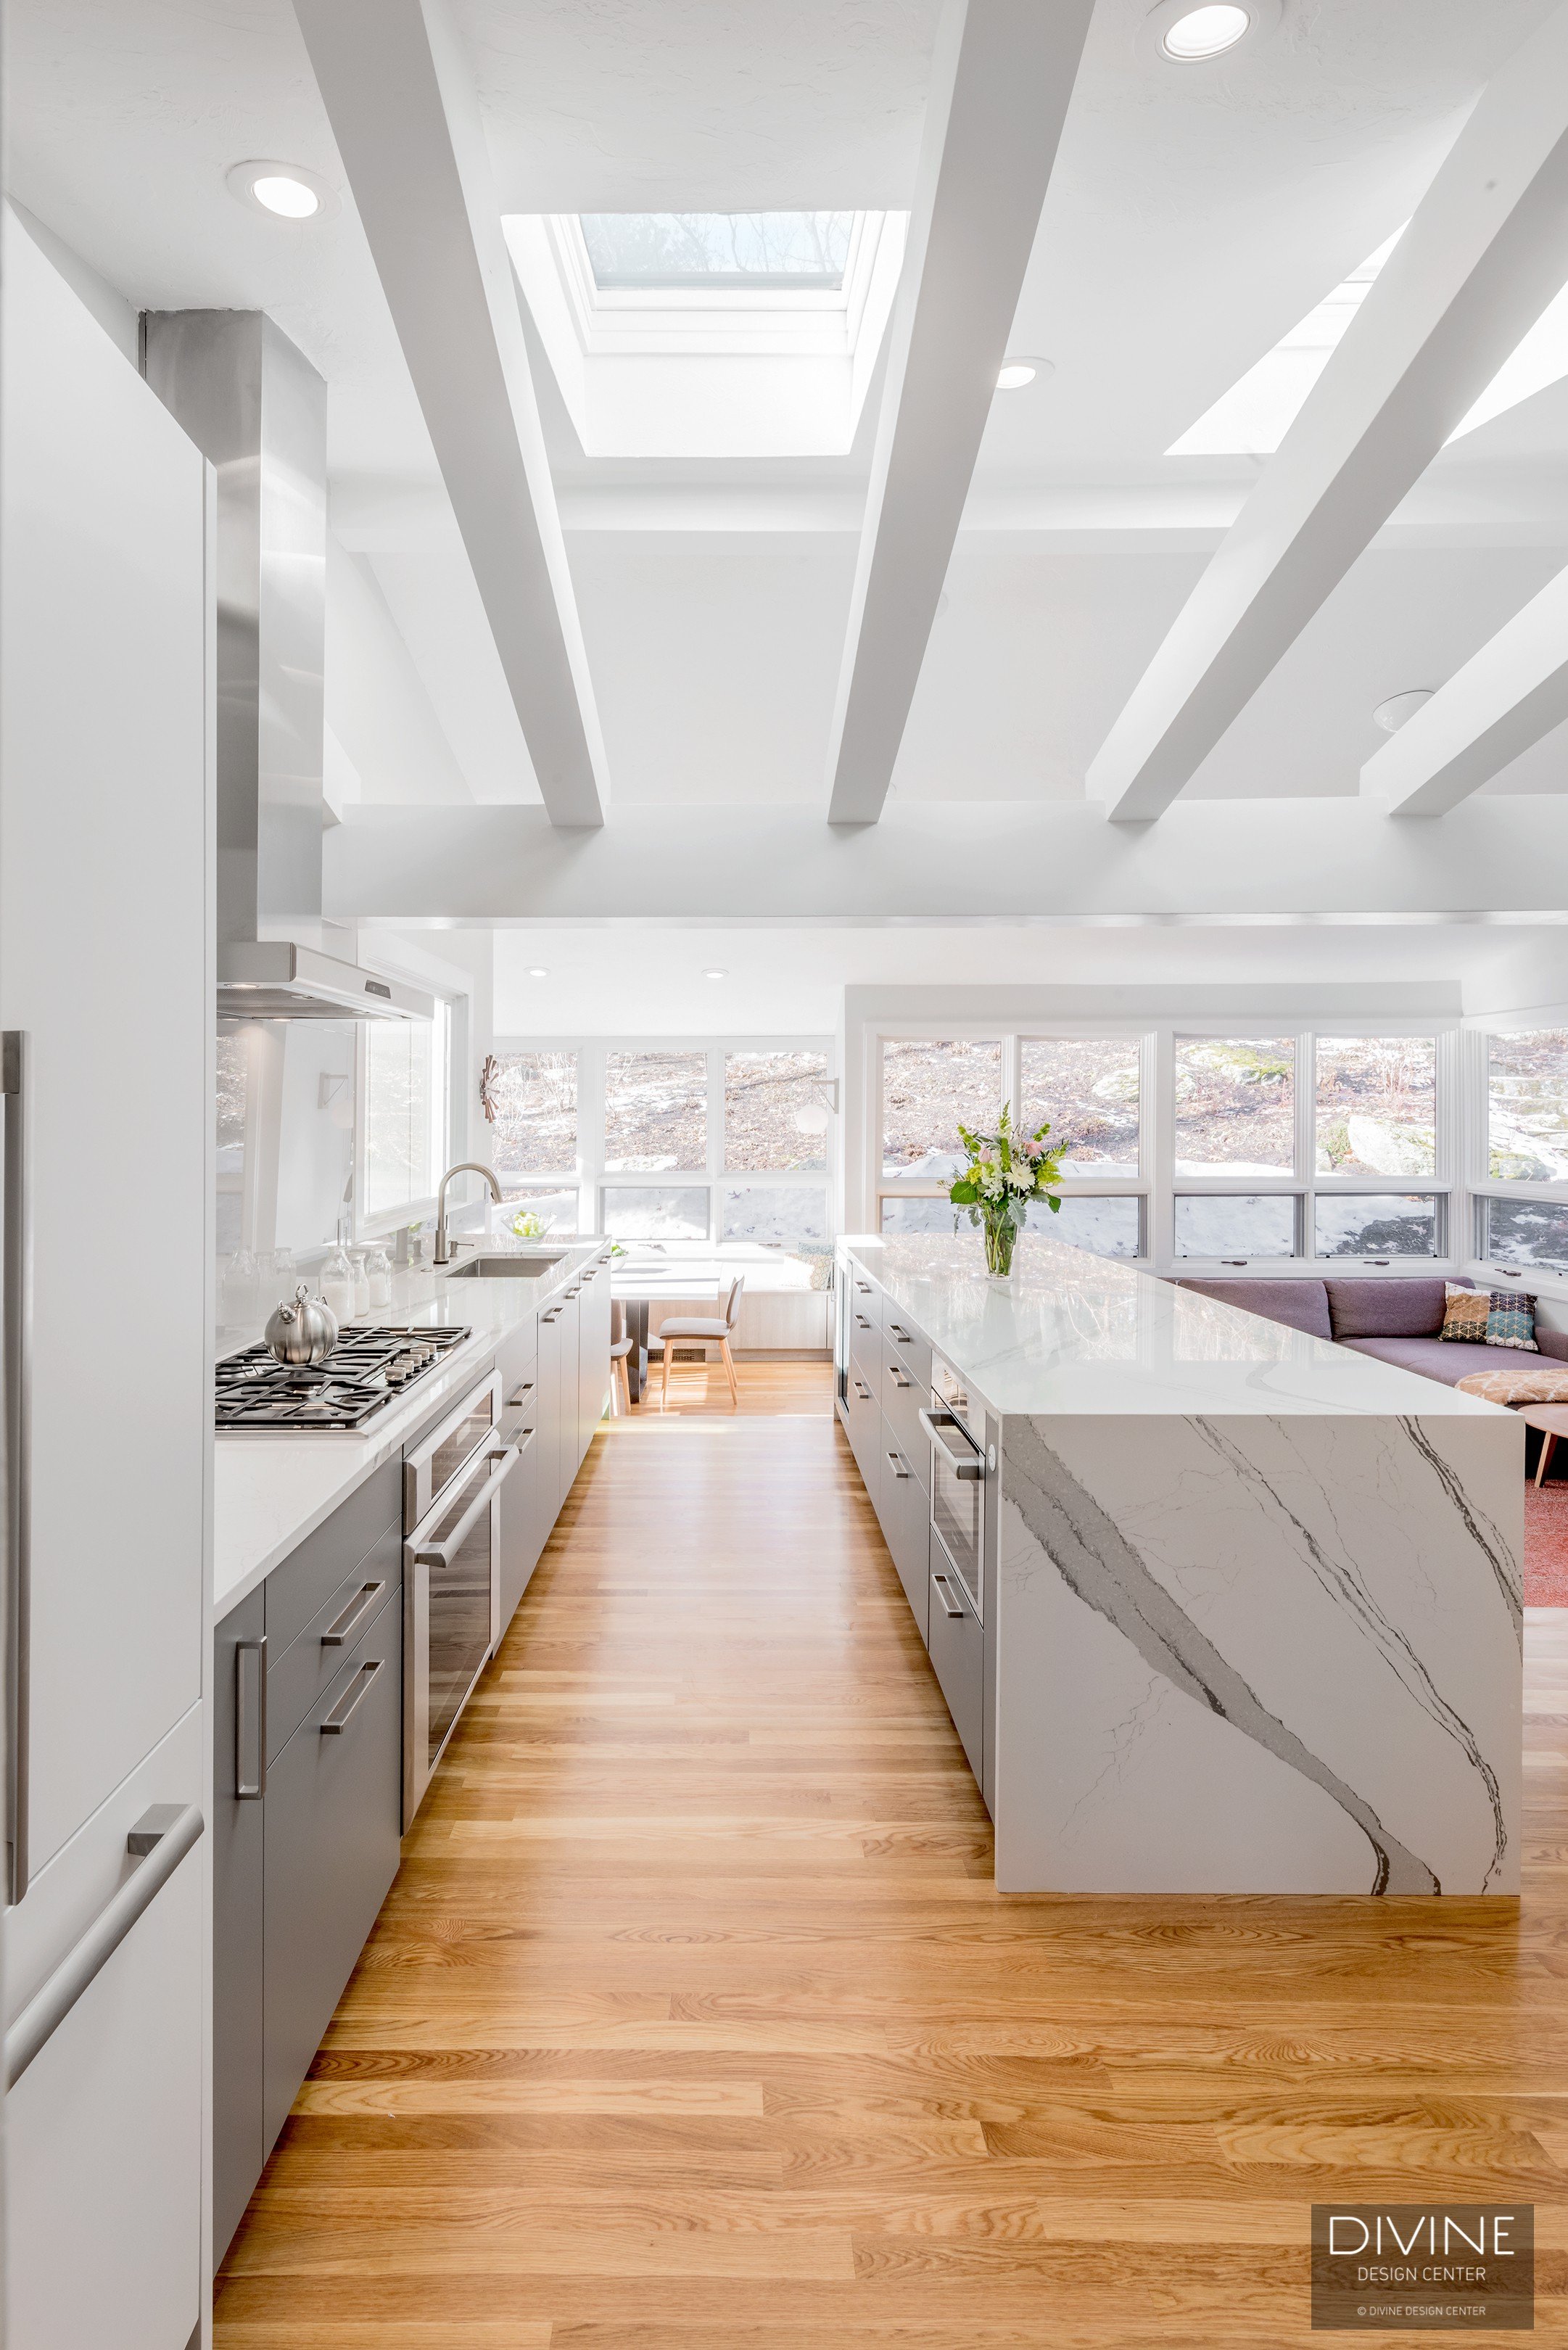 divine-design-center-boston-bedford-contemporary-kitchens.jpg